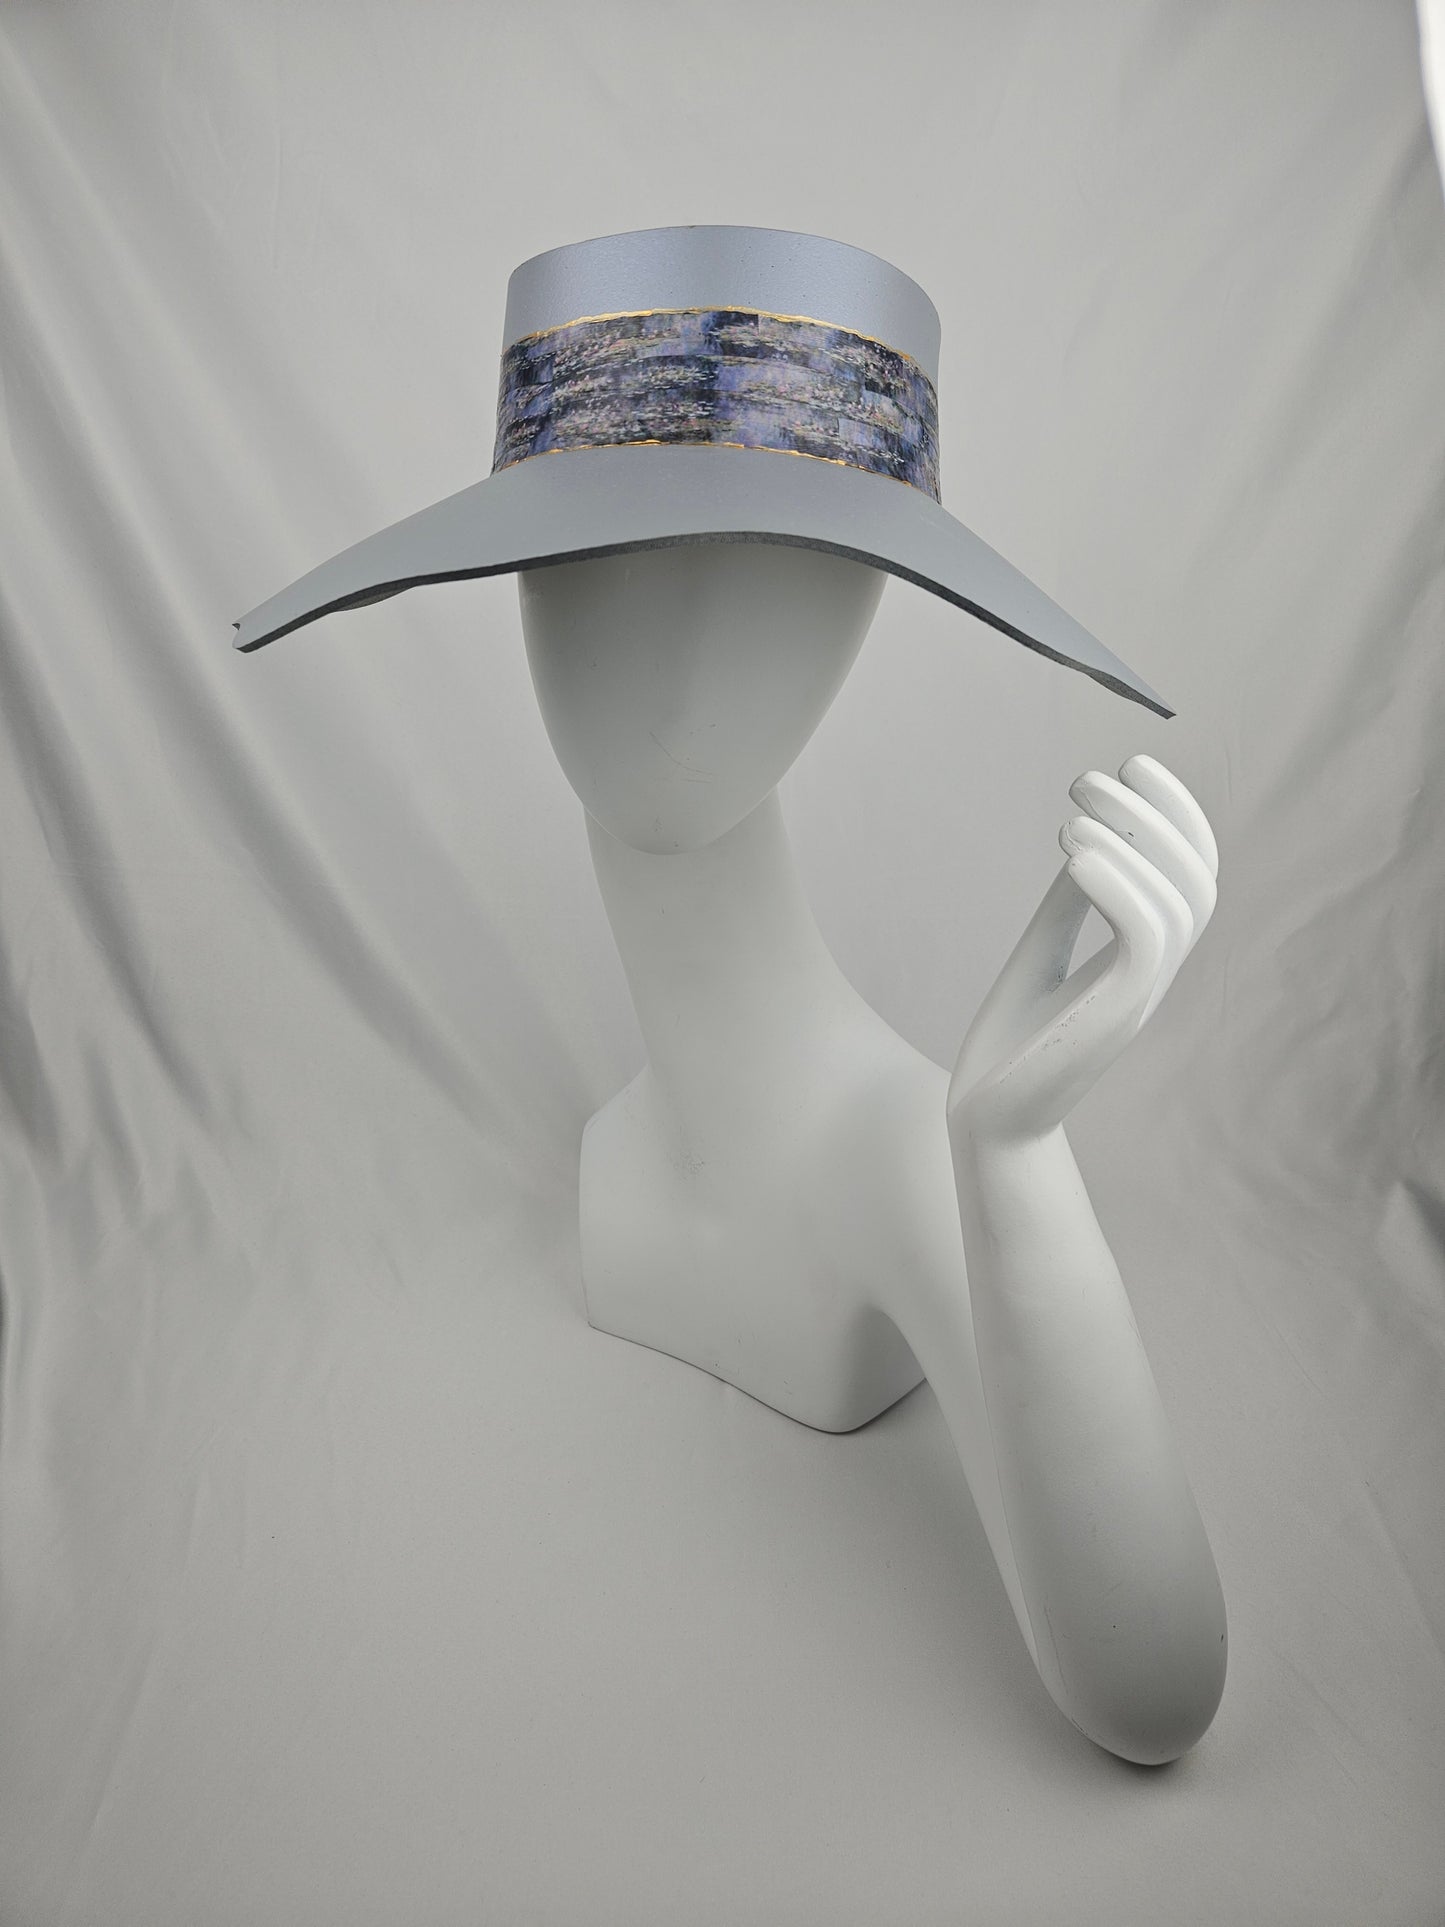 Trending Lavender Tinted Silver Lotus Foam Sun Visor Hat with Monet Style Band: Walks, Brunch, Asian, Golf, Easter, Church, No Headache, Derby